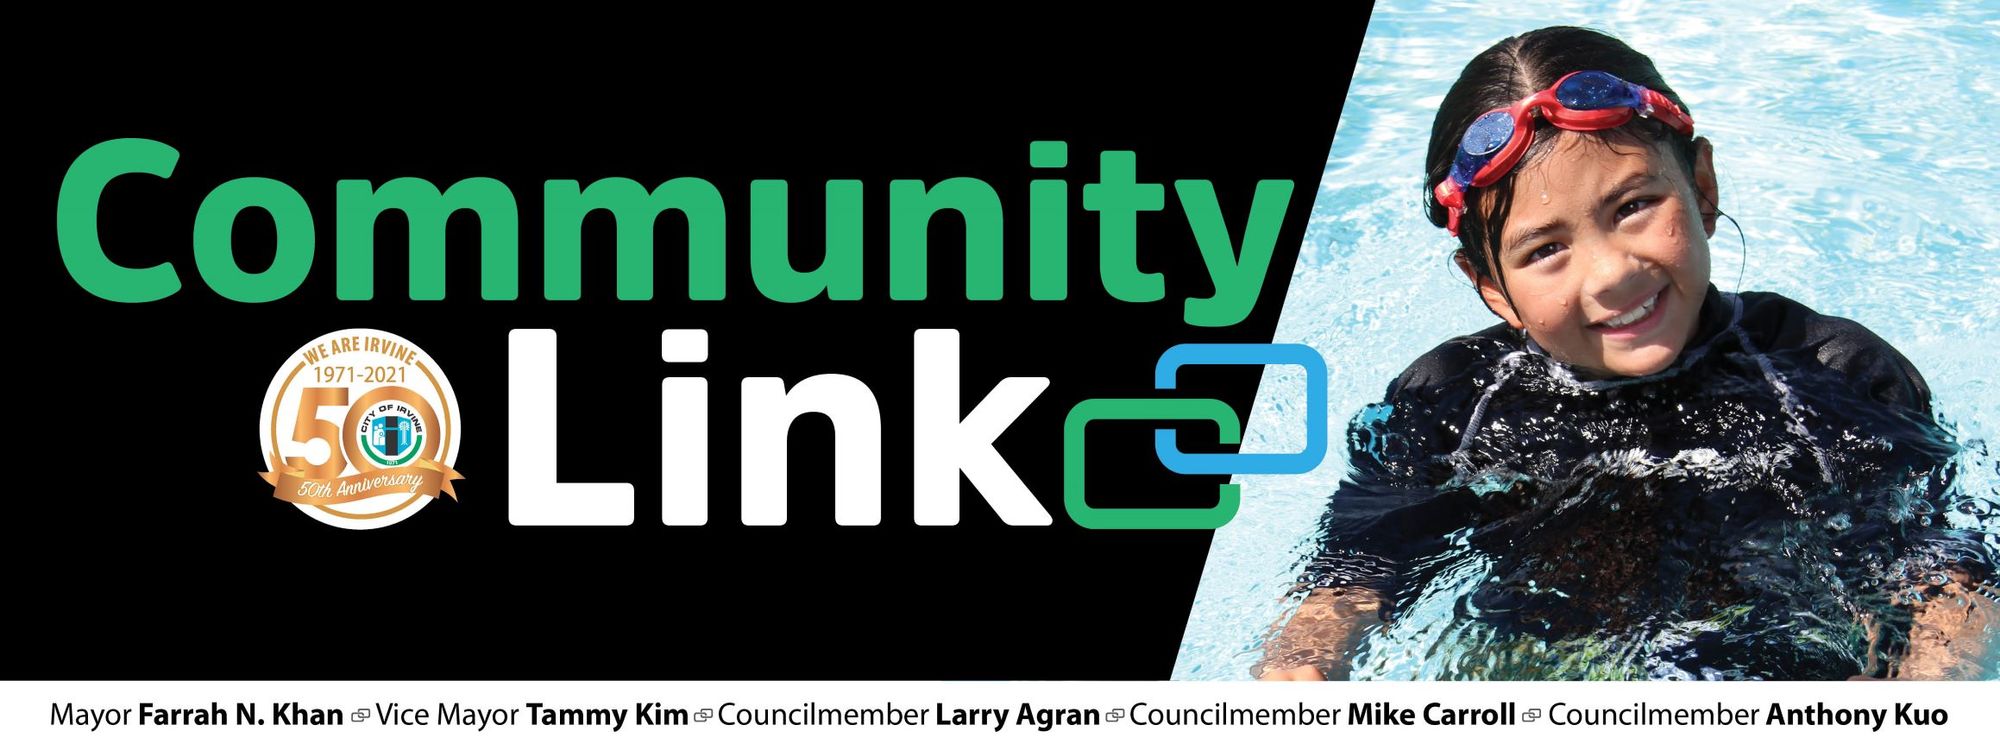 Community Link